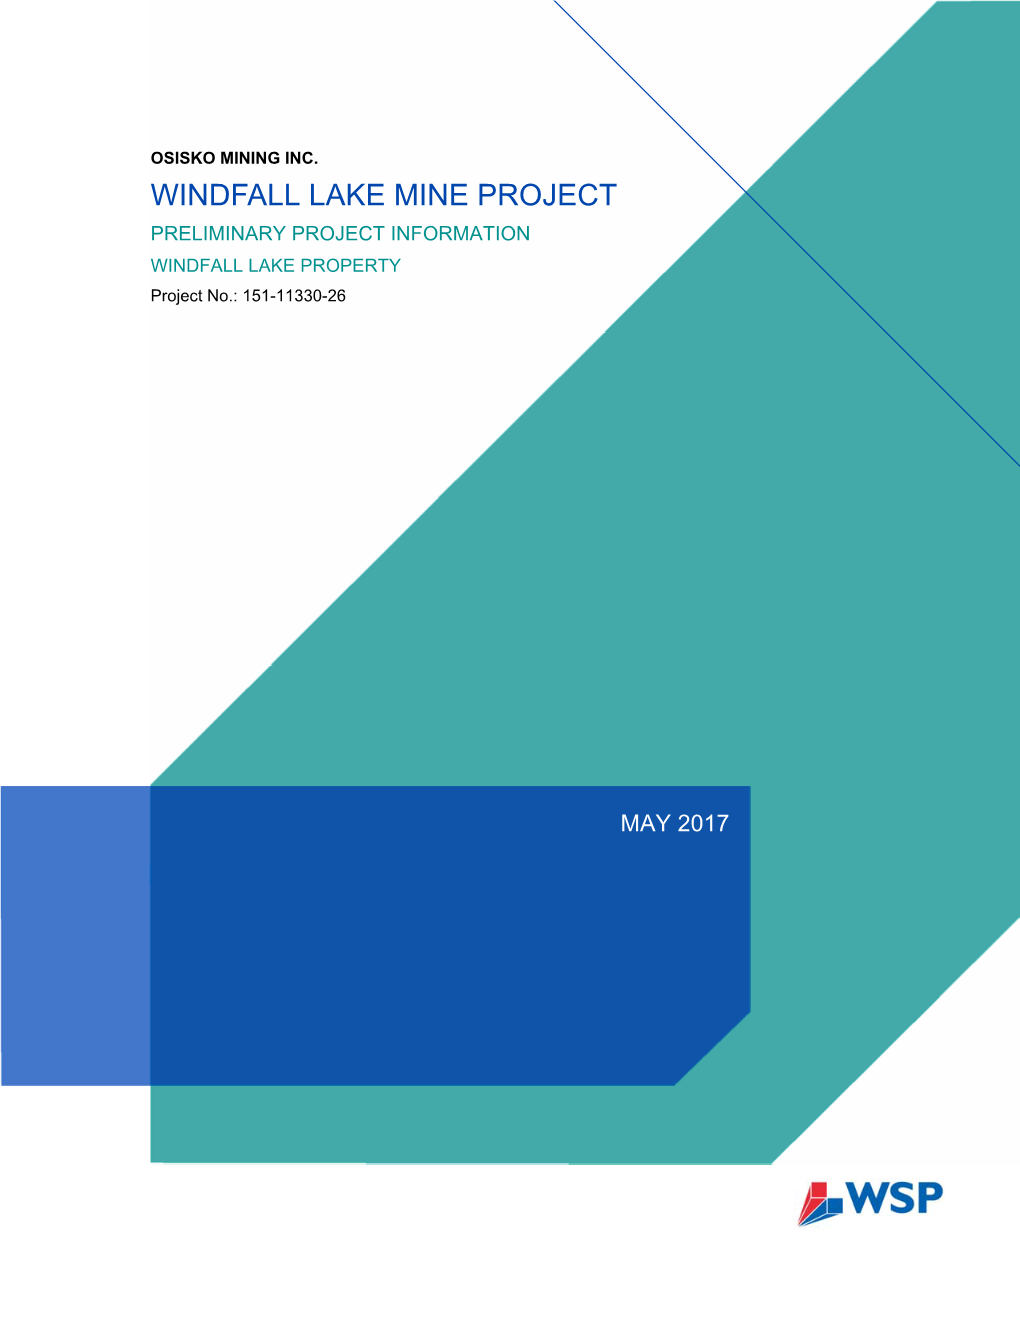 WINDFALL LAKE MINE PROJECT PRELIMINARY PROJECT INFORMATION WINDFALL LAKE PROPERTY Project No.: 151-11330-26